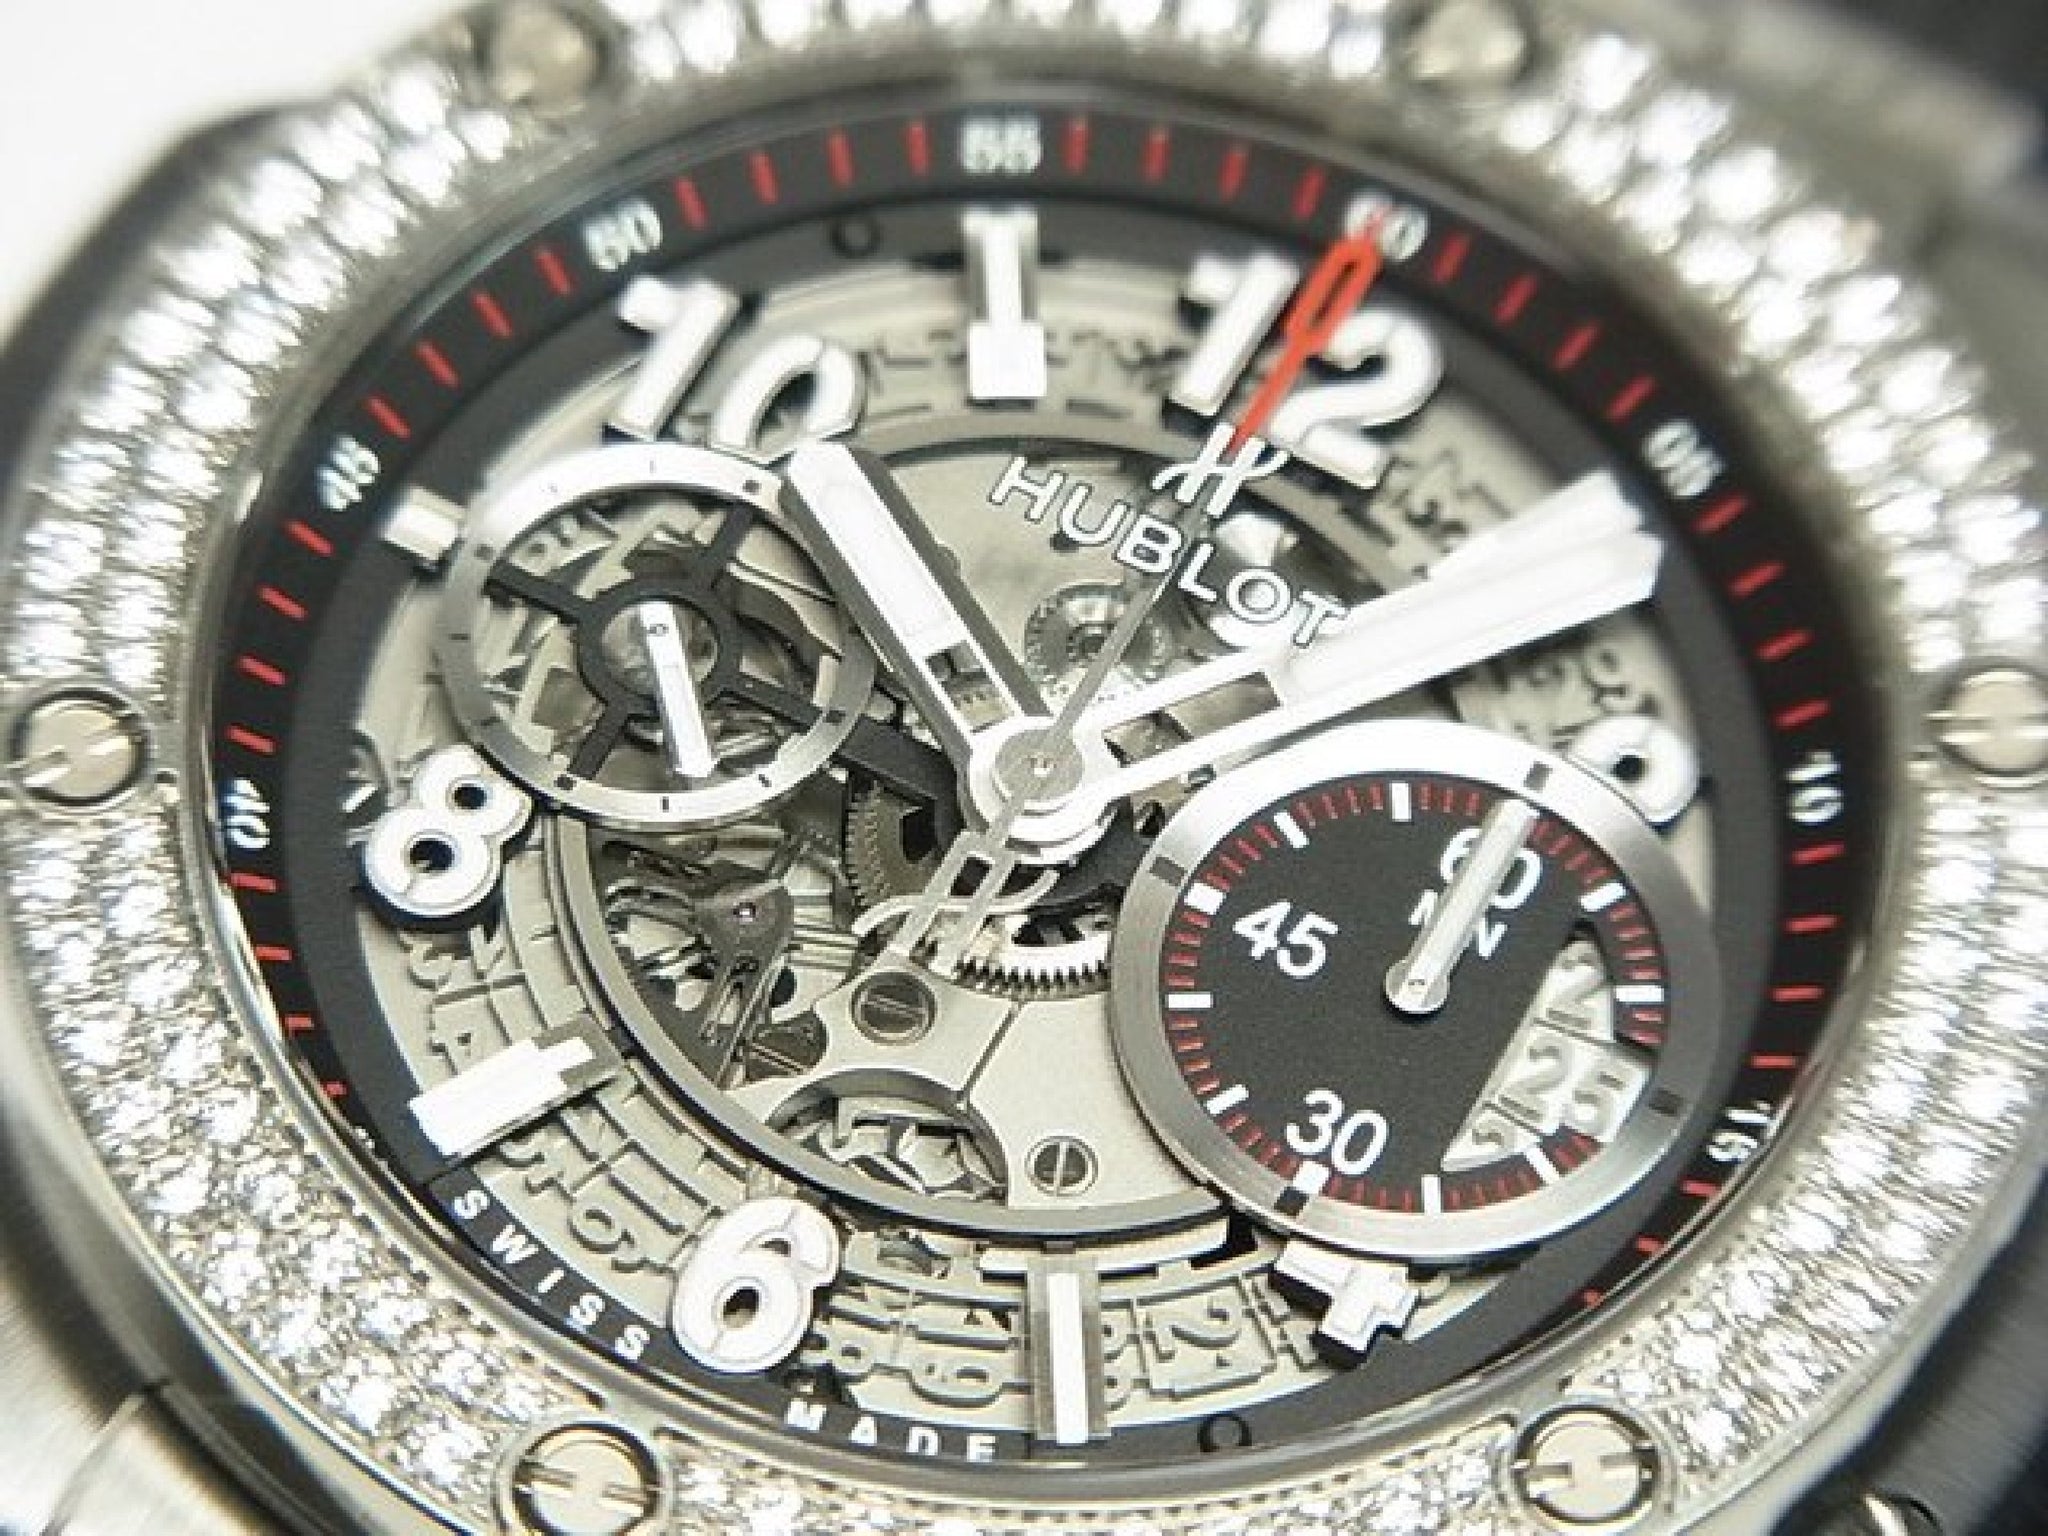 Buy Hublot Big Bang Mens Diamond Watch